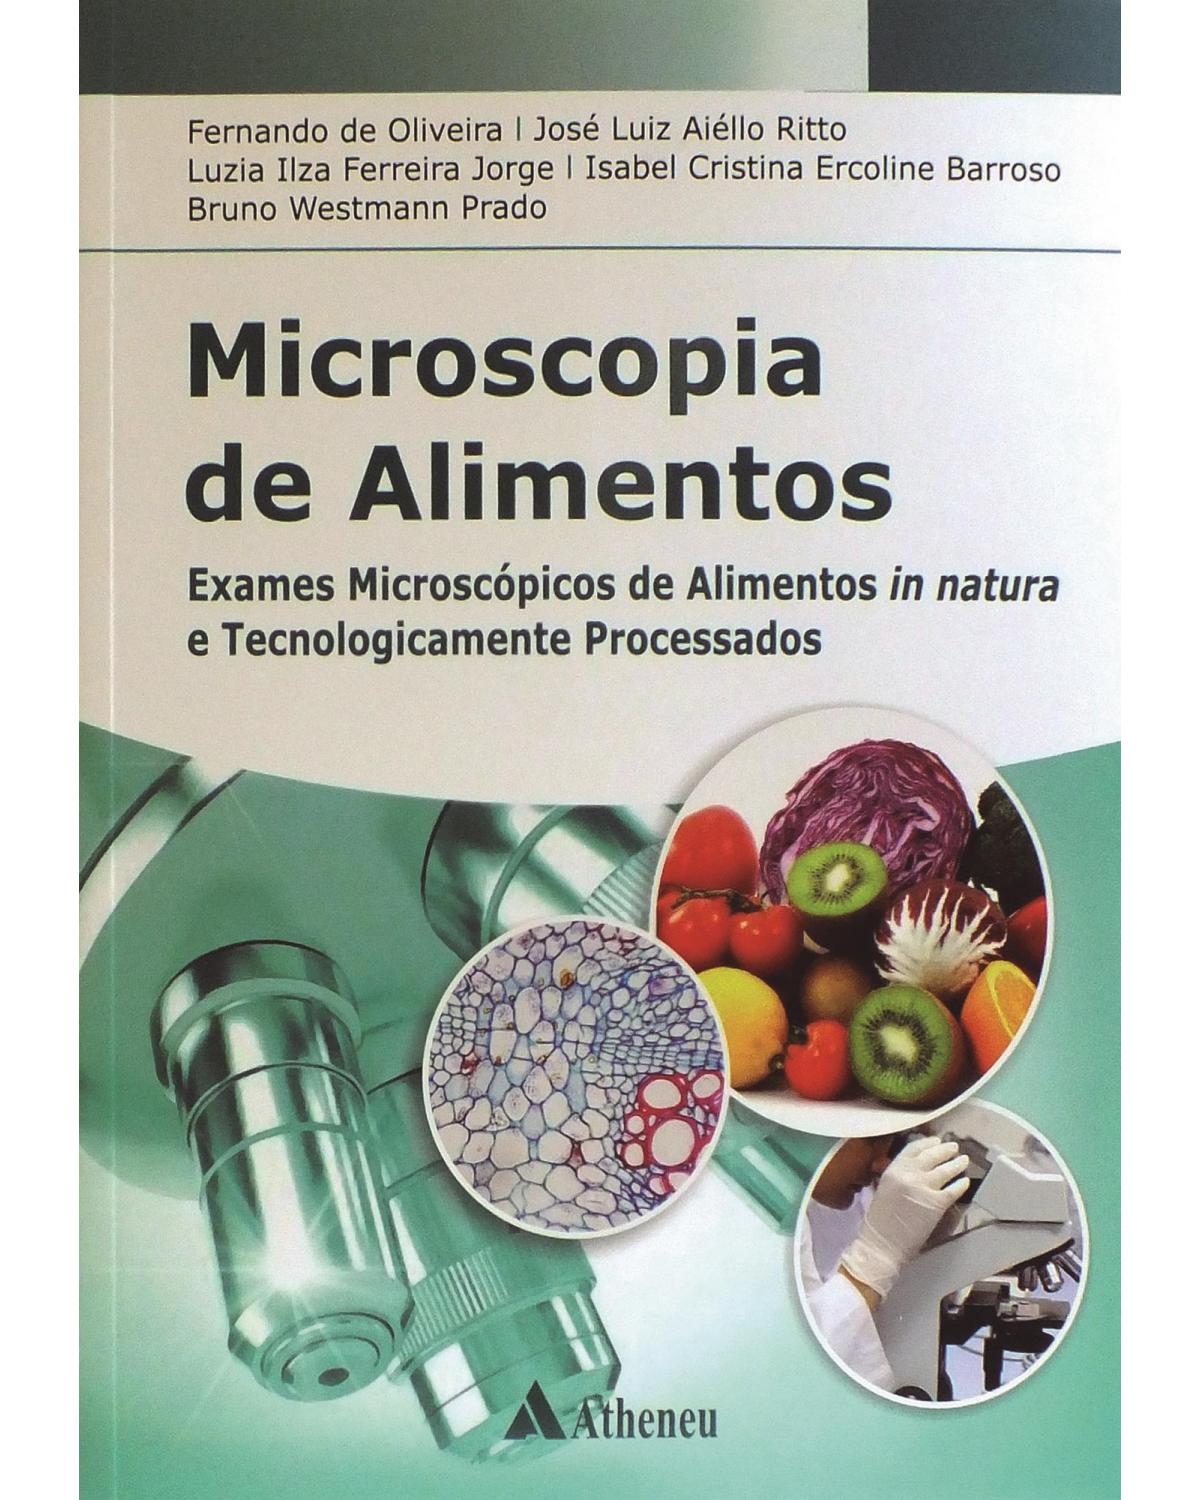 Microscopia de alimentos - exames microscópicos de alimentos in natura e tecnologicamente processados - 1ª Edição | 2015